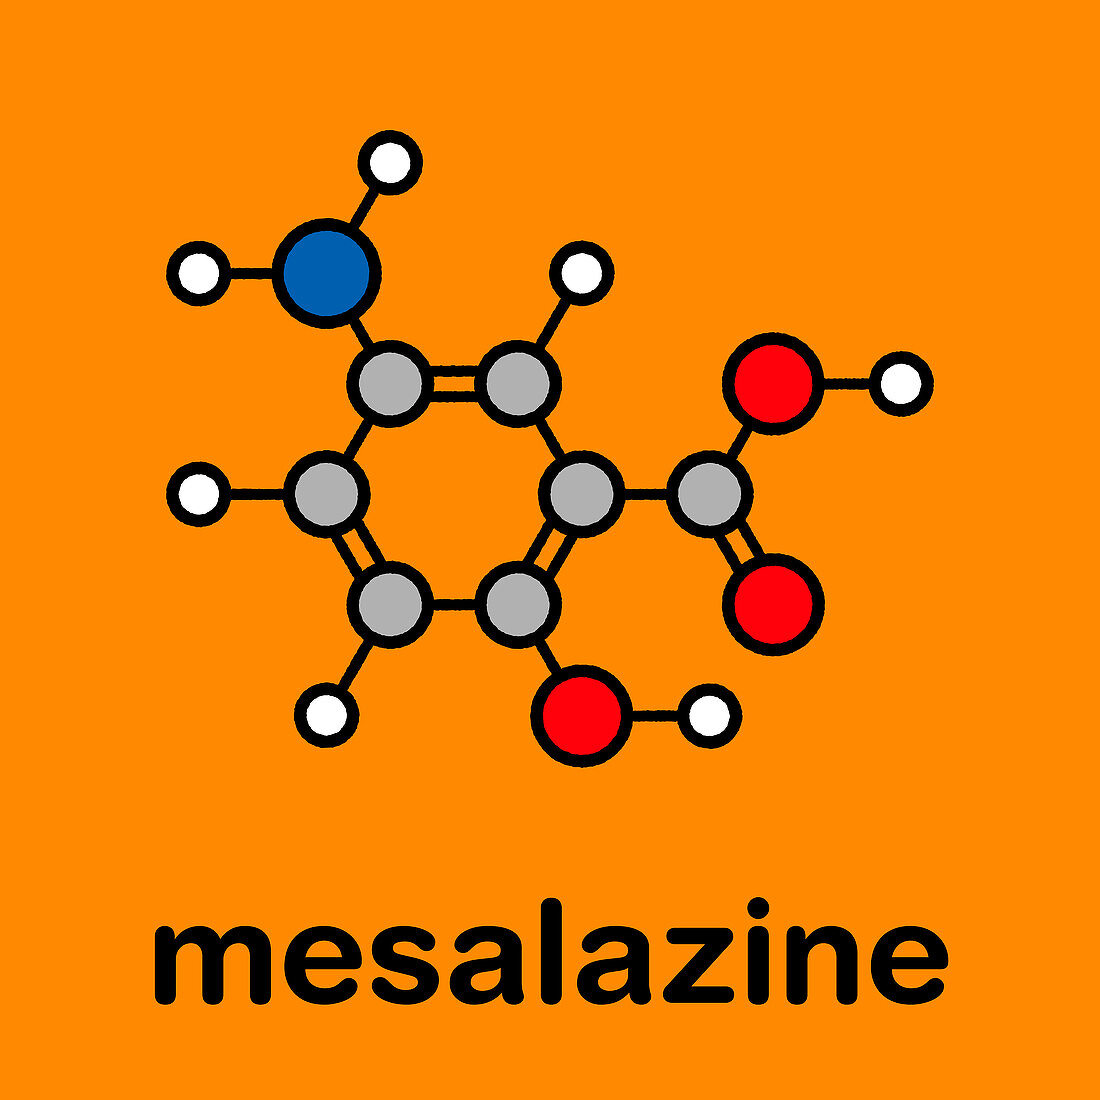 Mesalazine inflammatory bowel disease drug, molecular model